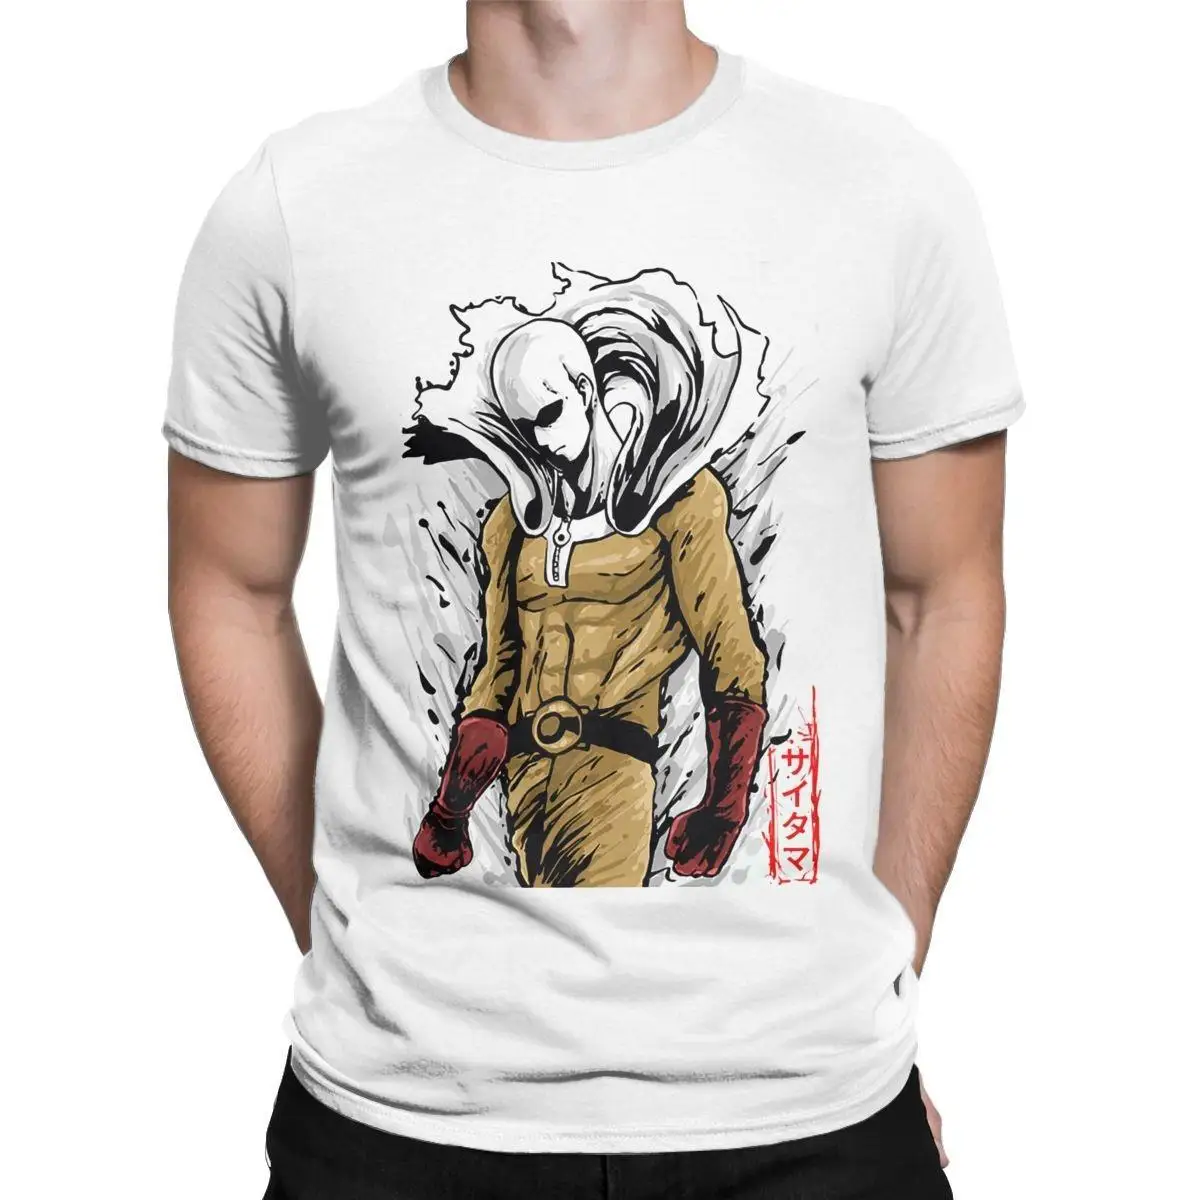 Vintage One Punch Man Saitama T-Shirts Men Round Neck Cotton T Shirt Short Sleeve Tees Gift Idea Tops